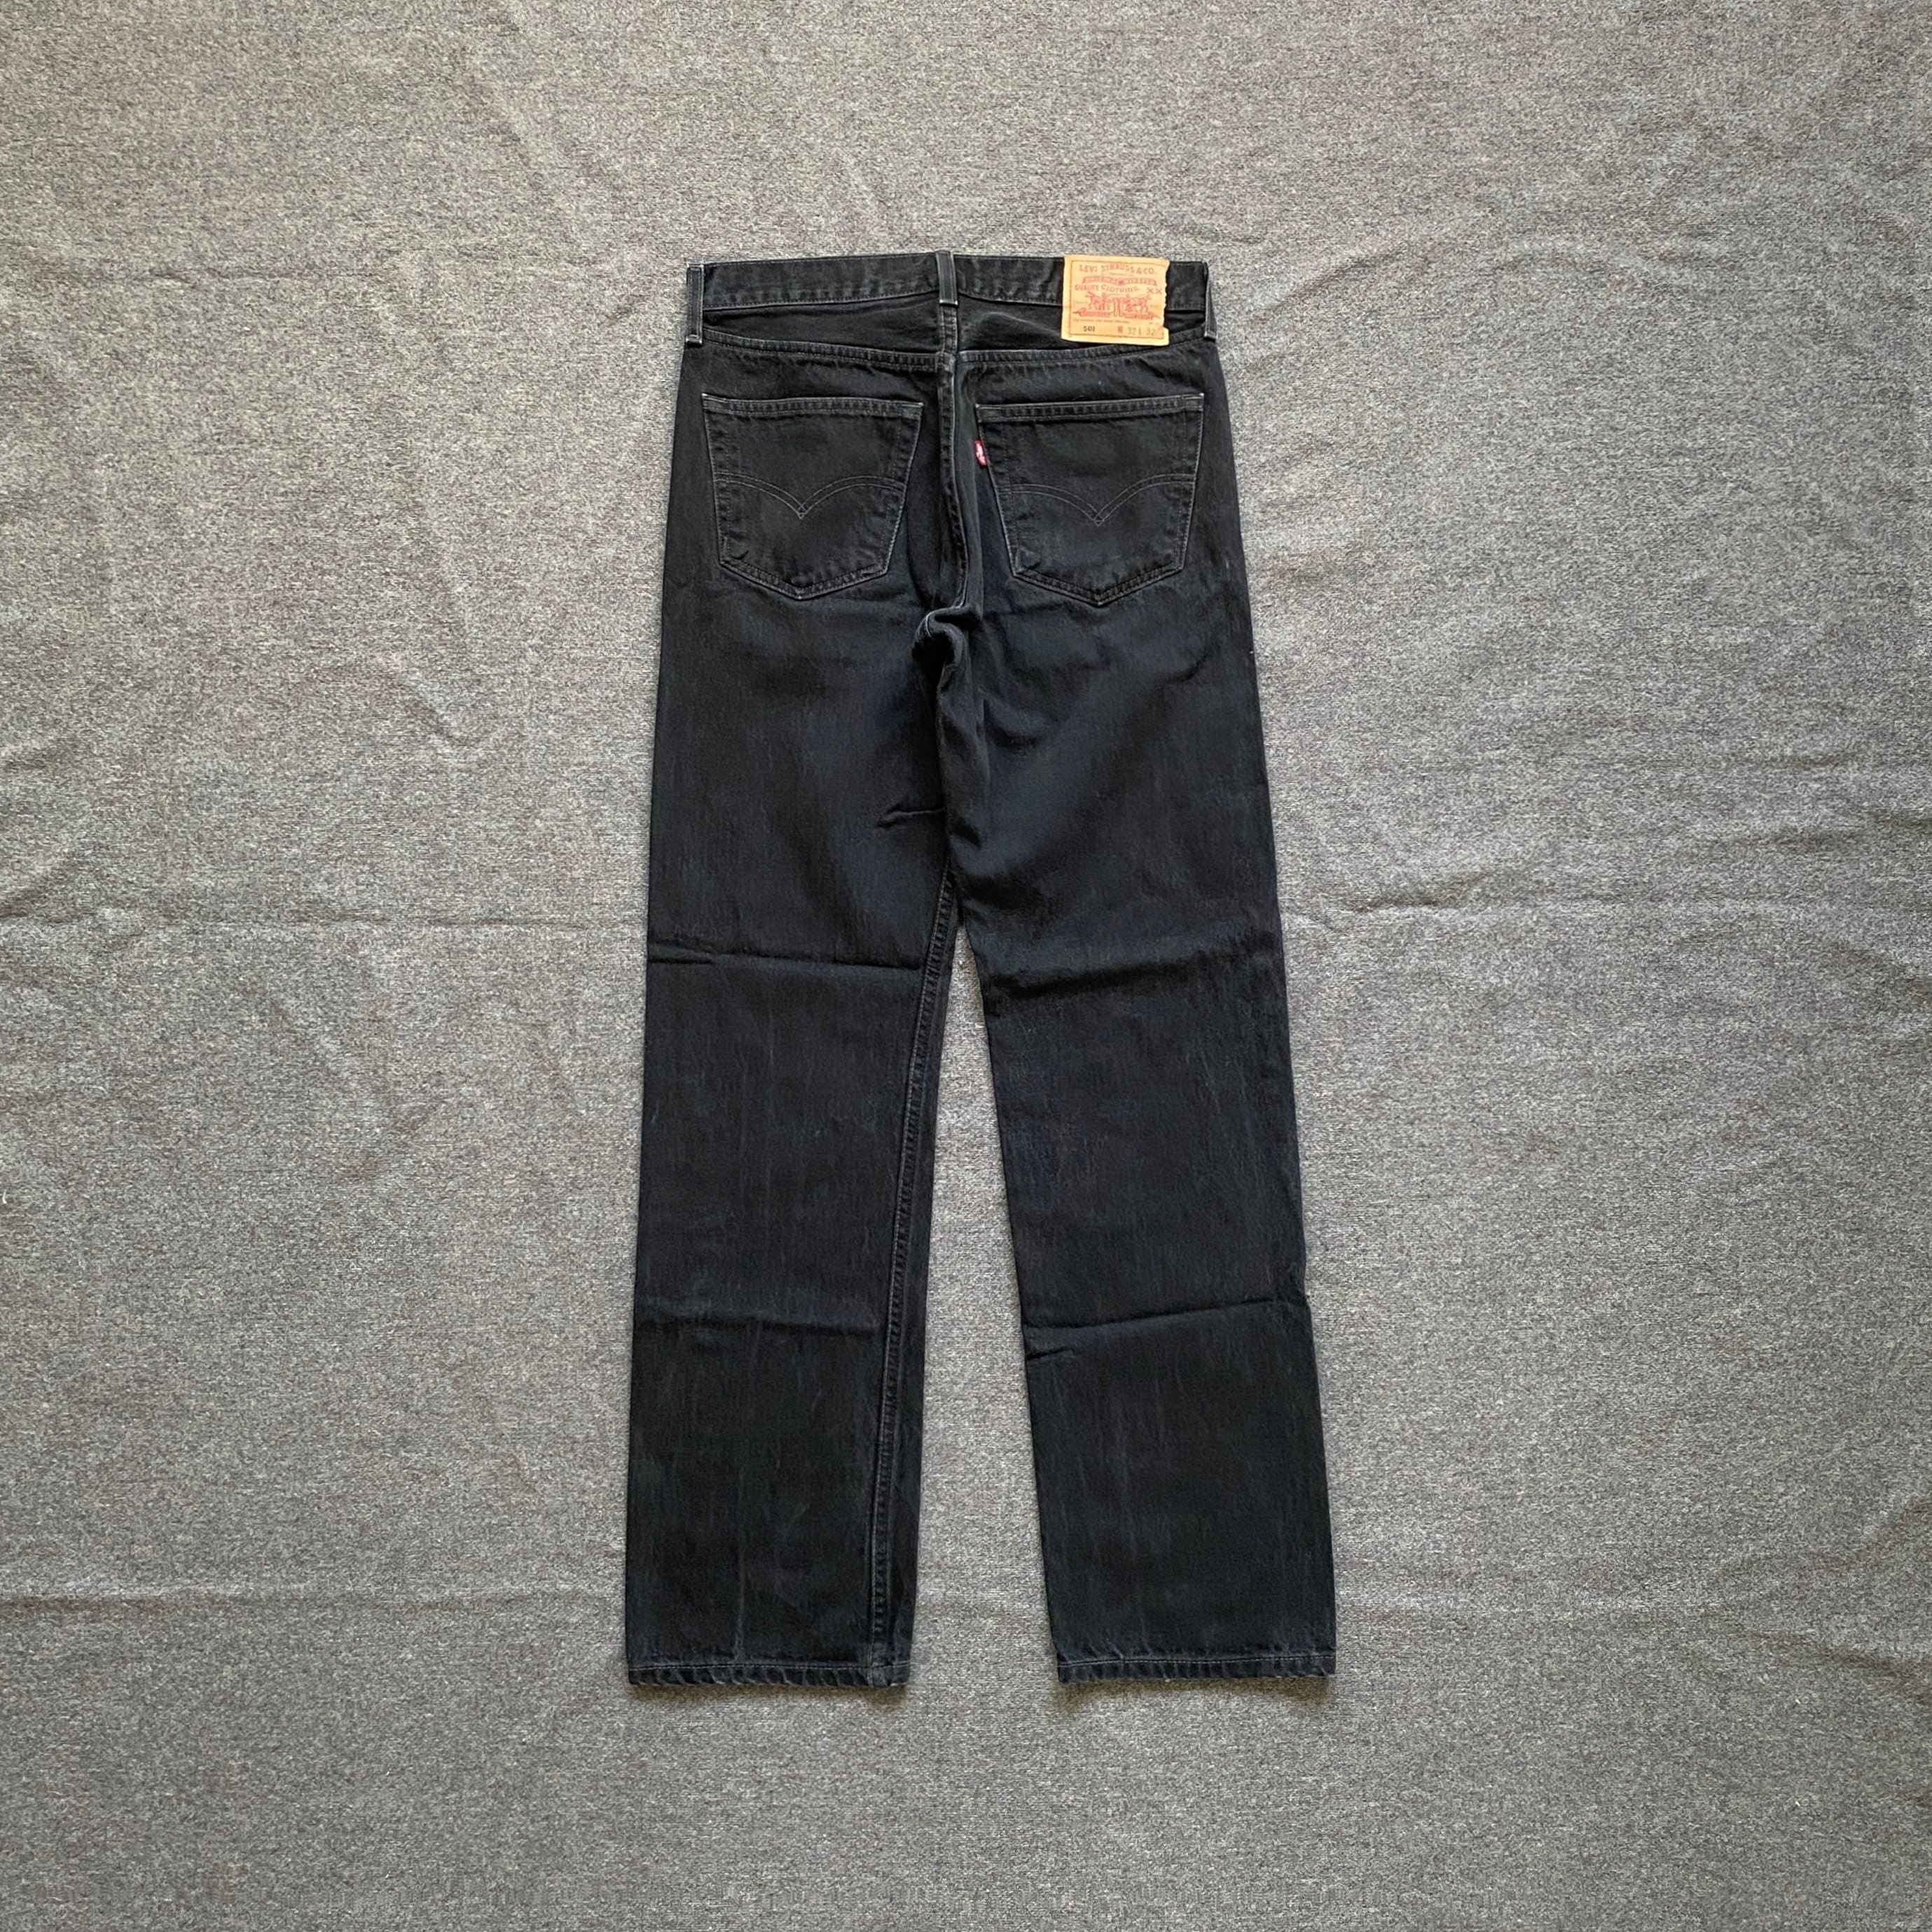 Kleding Gender-neutrale kleding volwassenen Jeans vintage levi's maat 34 gemaakt in usa 501 